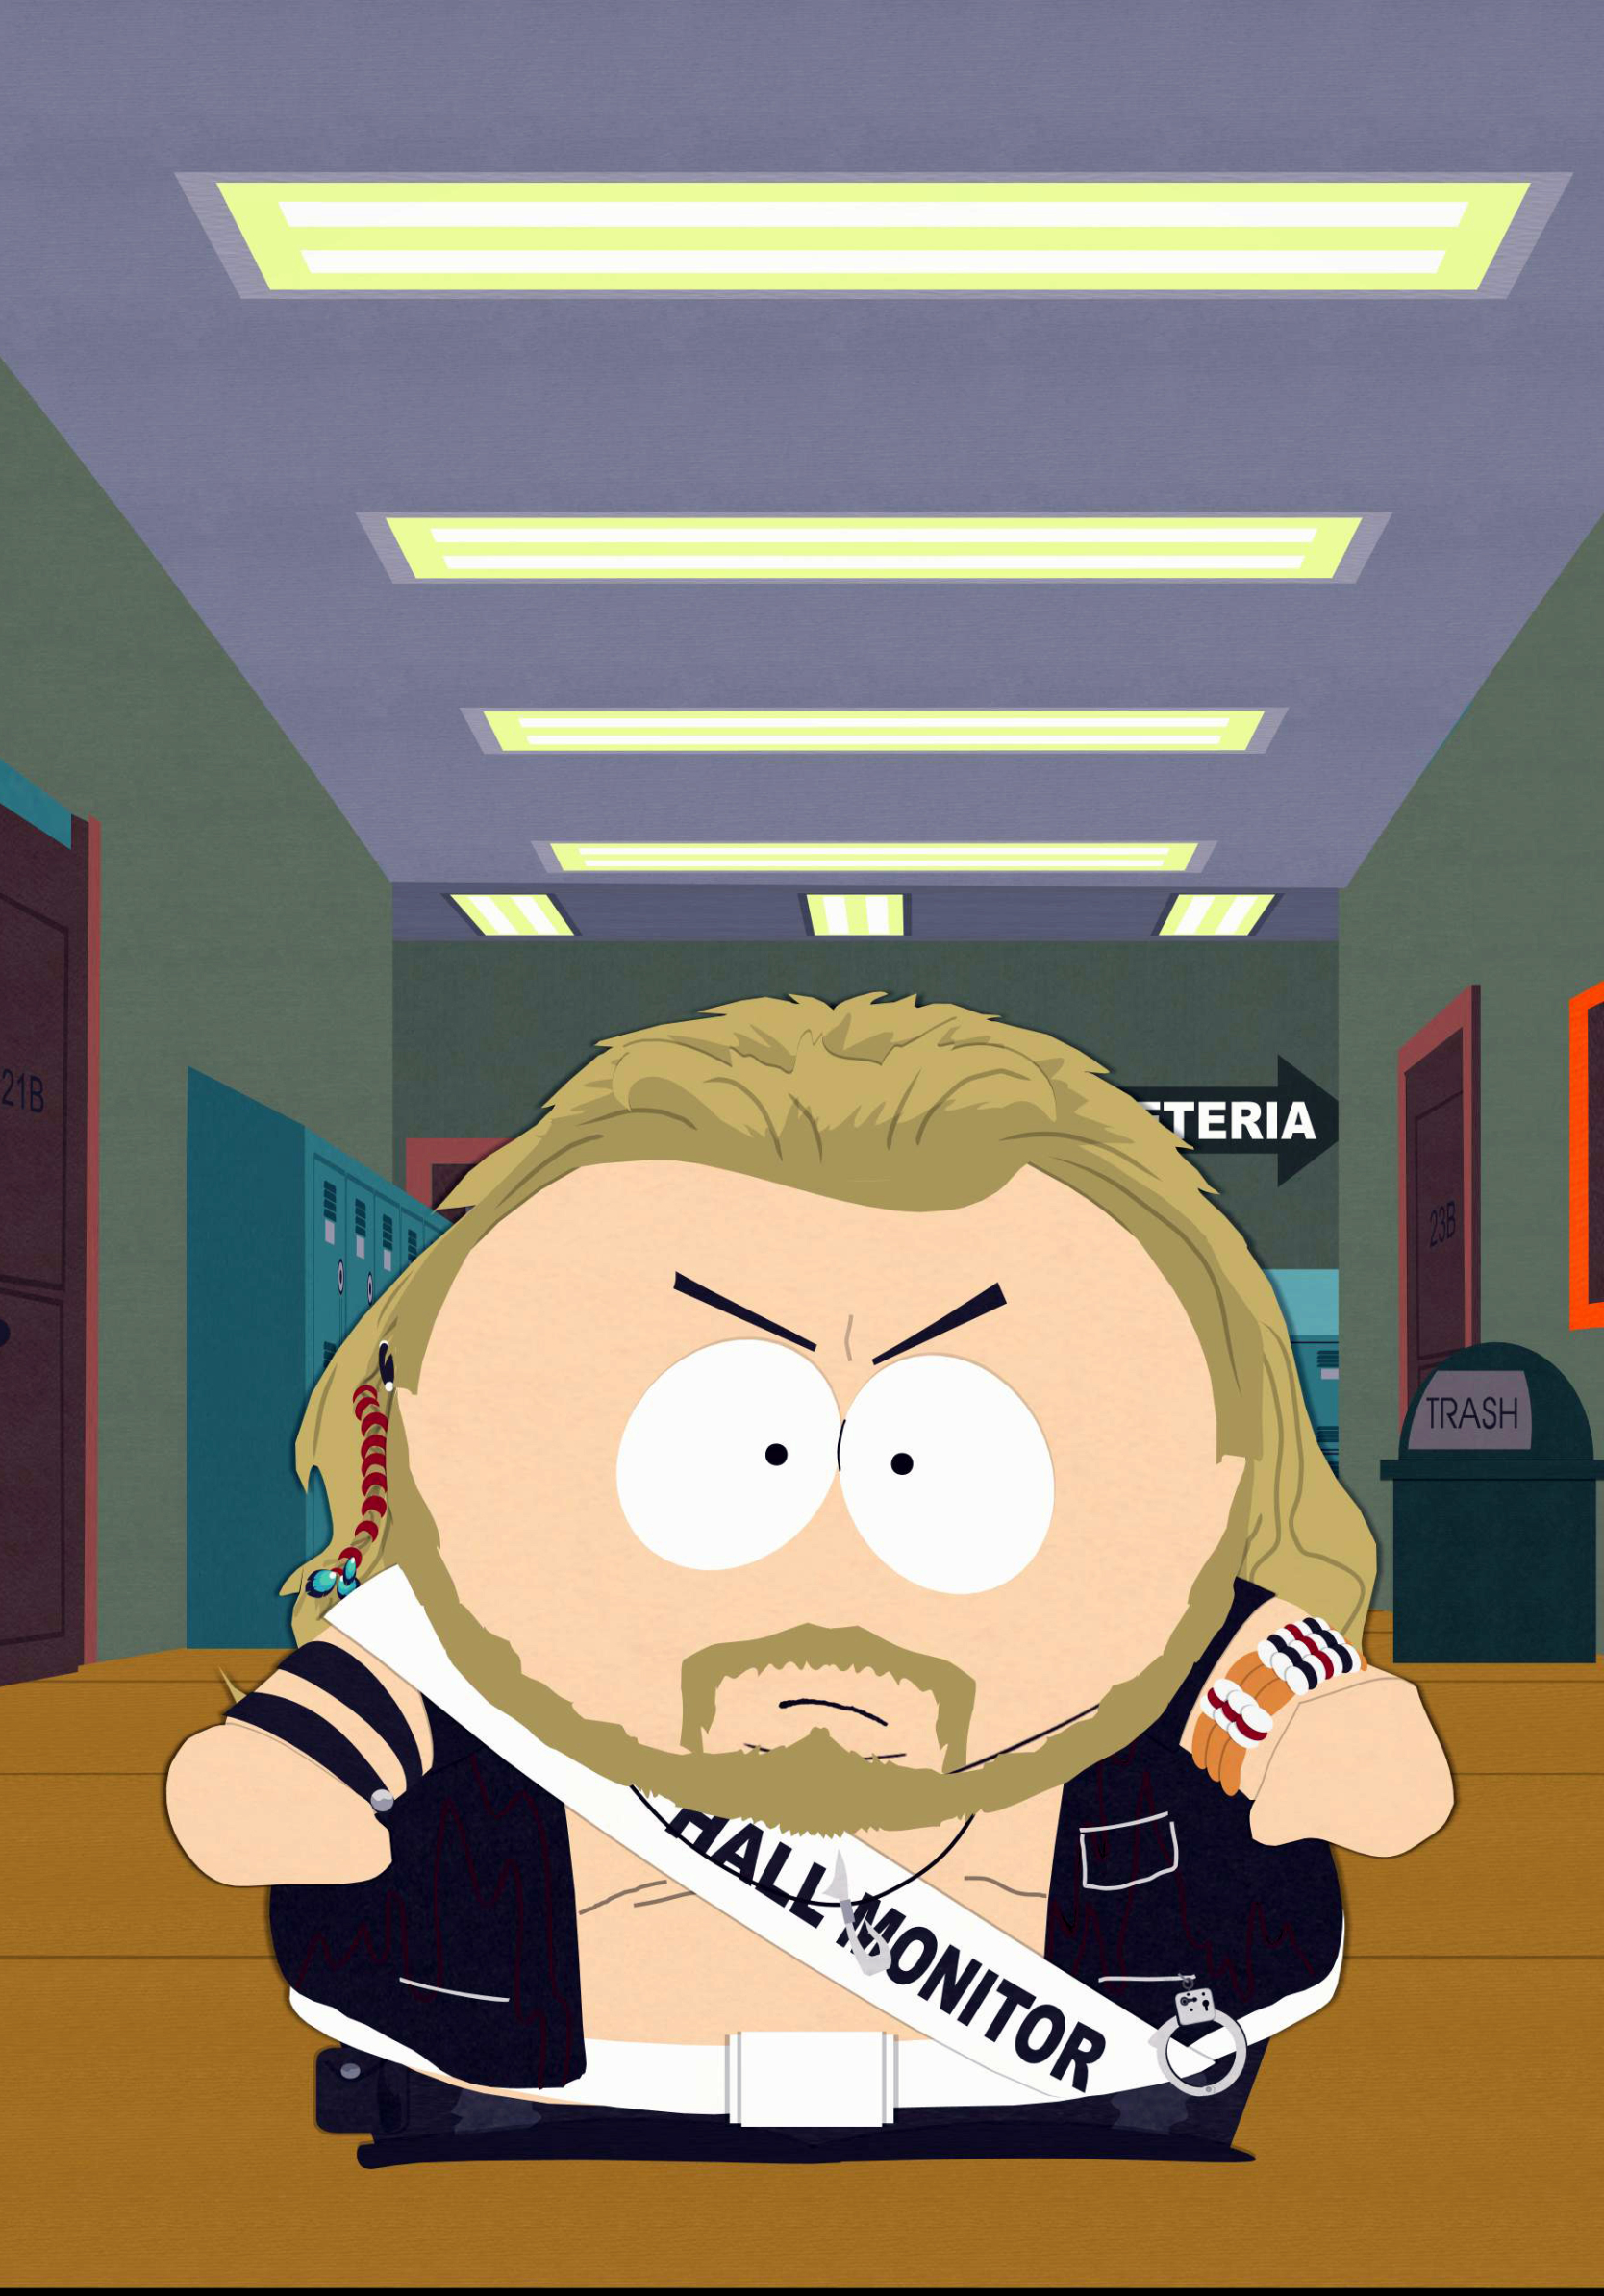 Handy-Wallpaper South Park, Fernsehserien, Eric Cartmann kostenlos herunterladen.